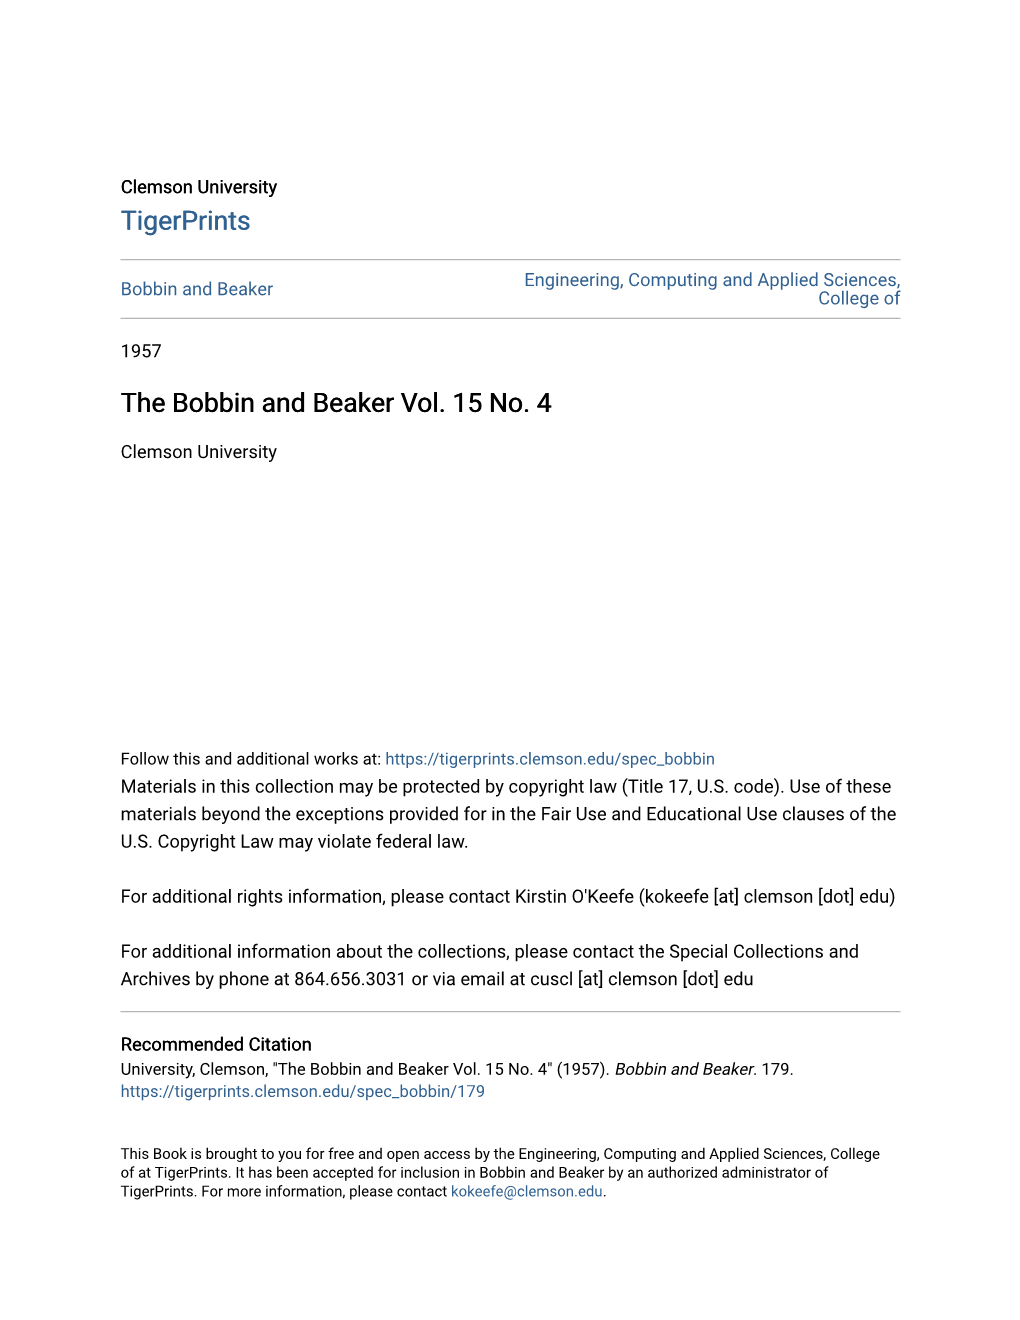 The Bobbin and Beaker Vol. 15 No. 4